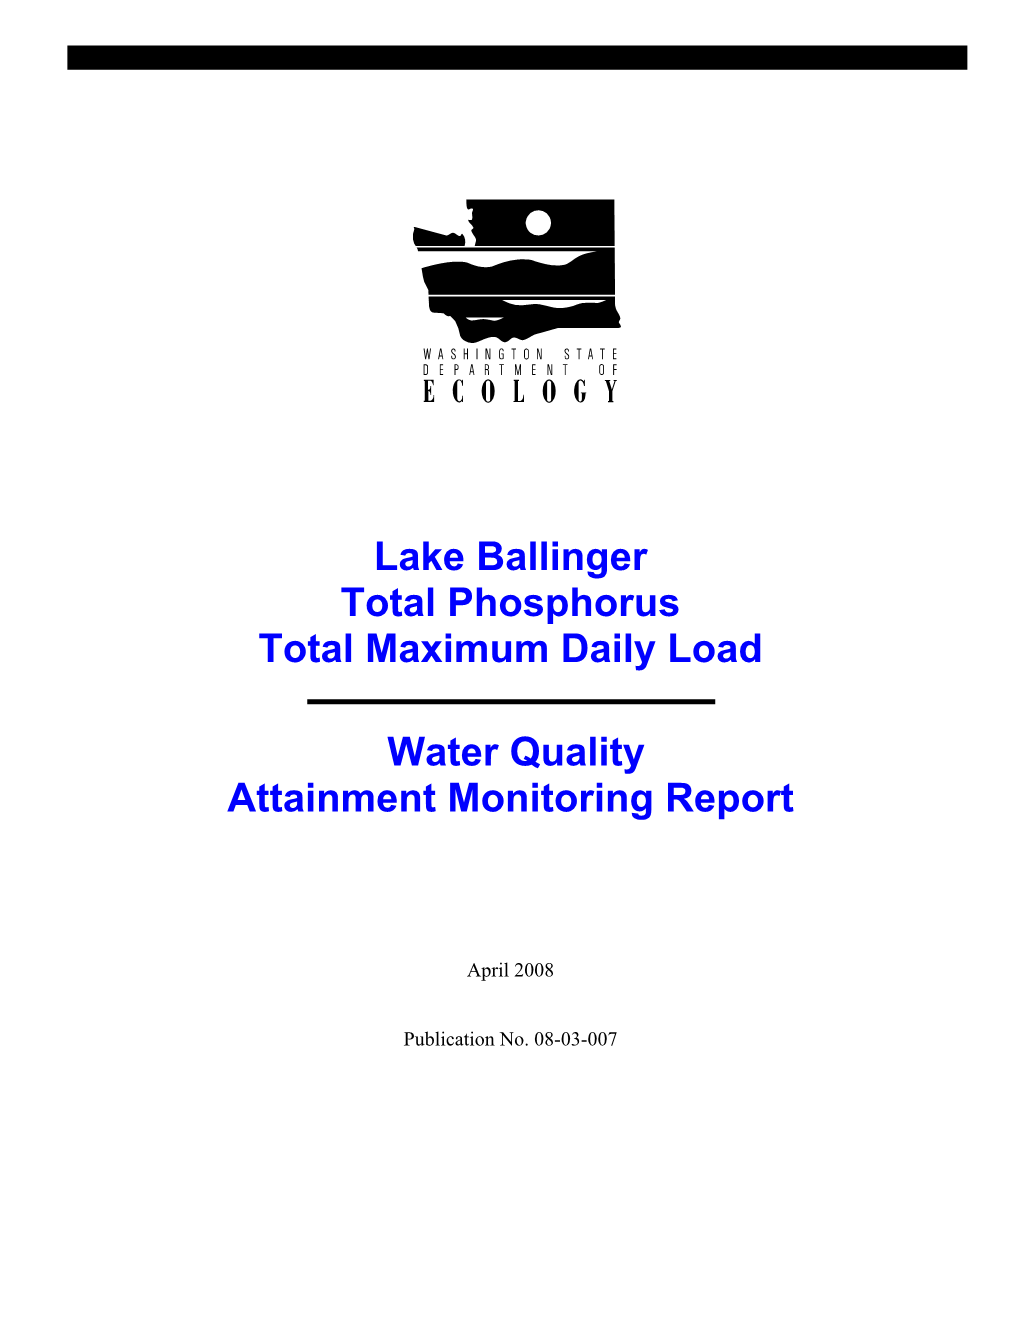 Lake Ballinger Total Phosphorus Total Maximum Daily Load: Water Quality Attainment Monitoring Report